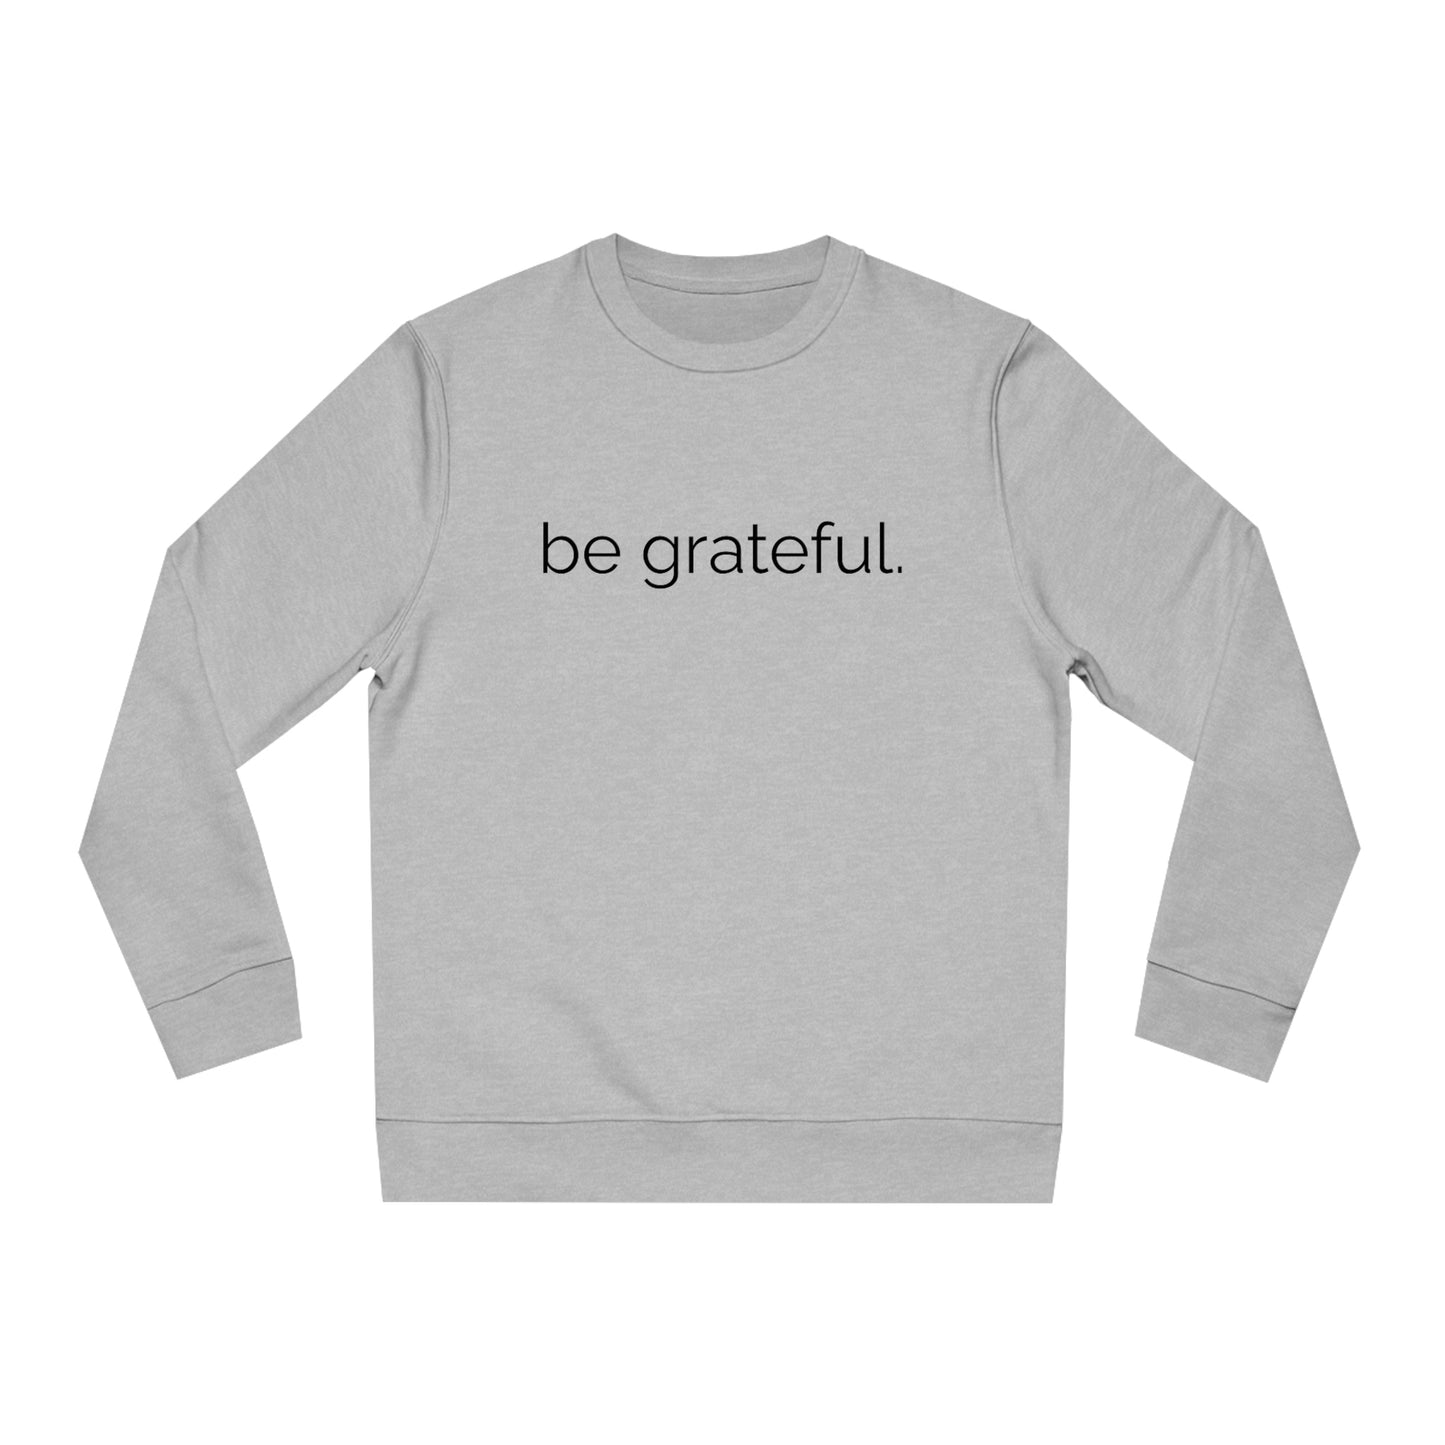 be grateful.